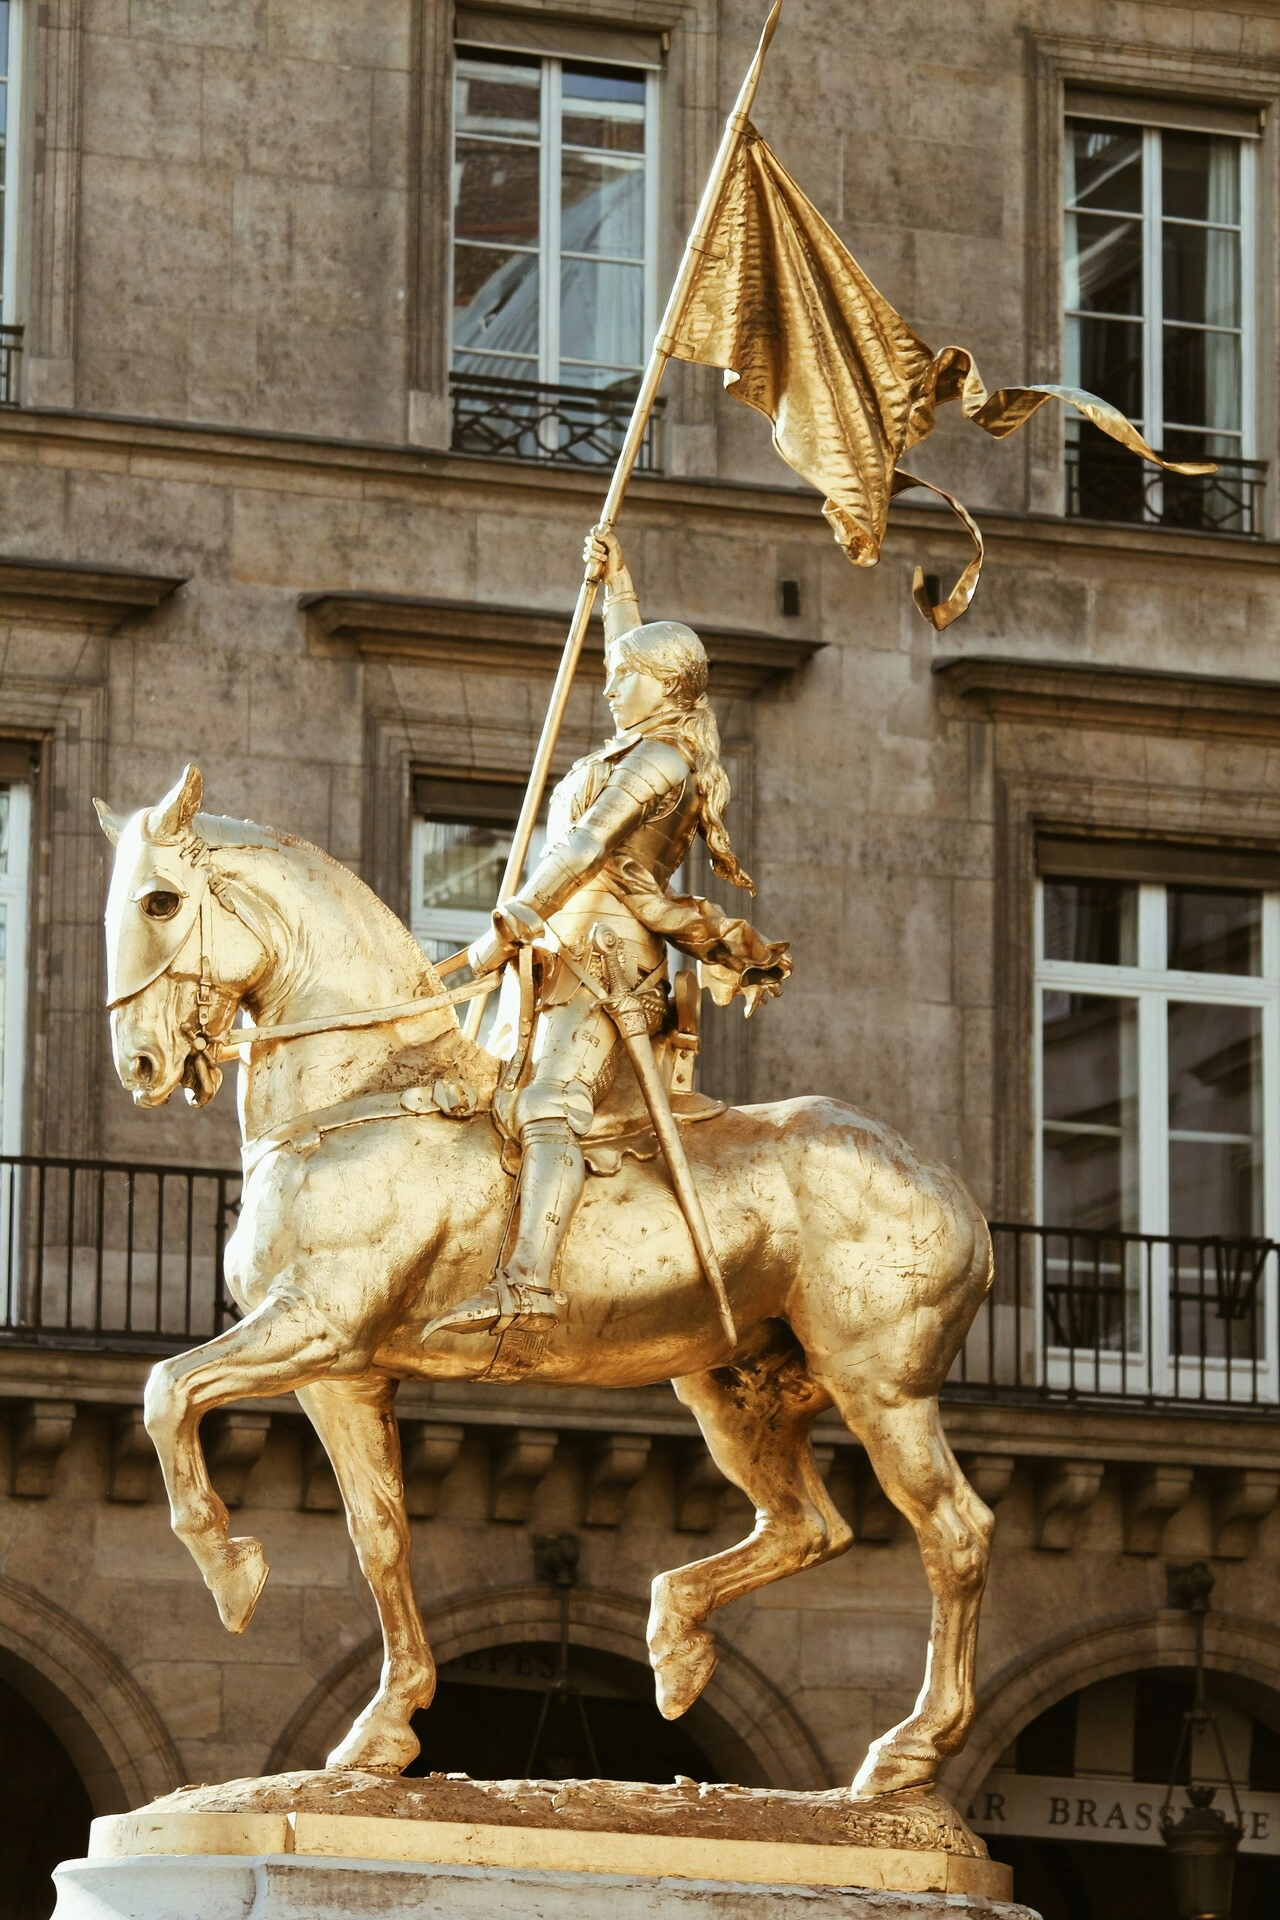 General 1280x1920 Jeanne d'Arc gold sculpture statue women Caucasian long hair armor cuirass gauntlets greaves armored boots spear sword horse hero history flag France european portrait display horseback